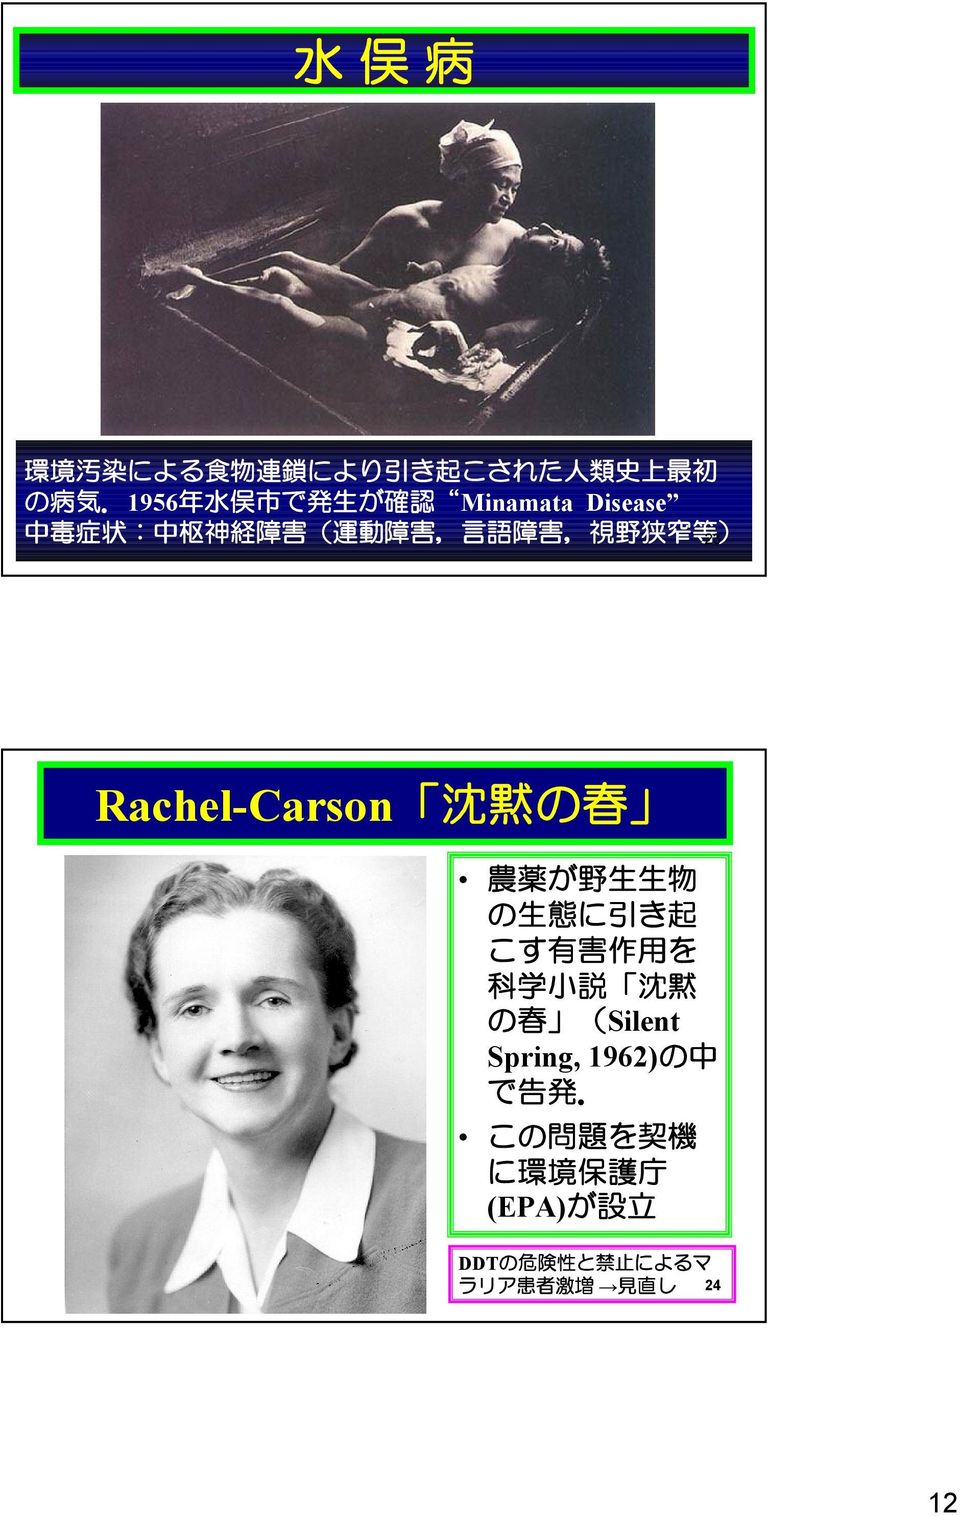 Rachel-Carson